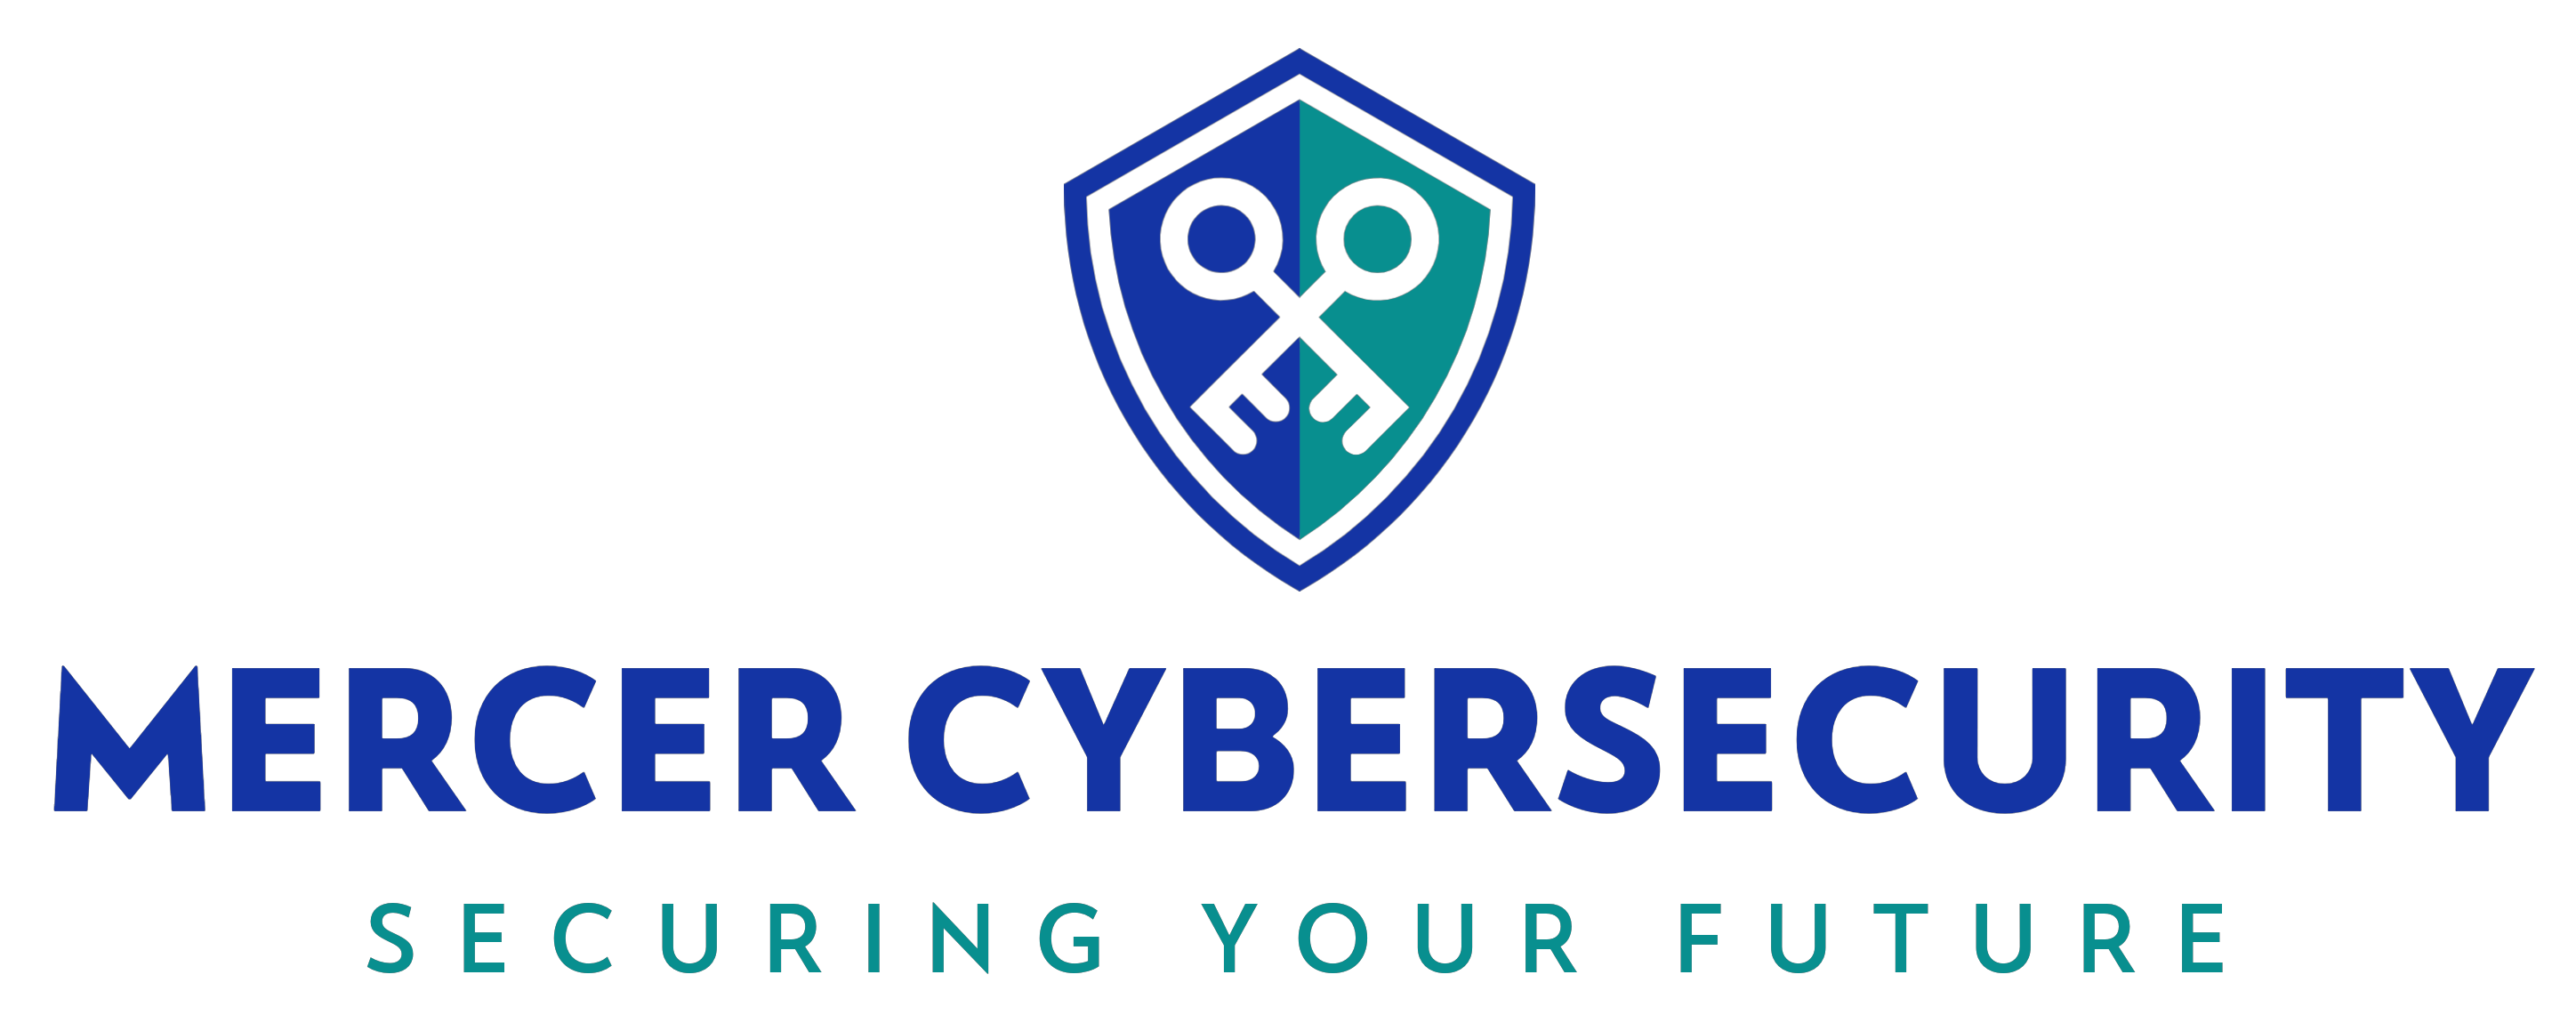 Mercer Cybersecurity